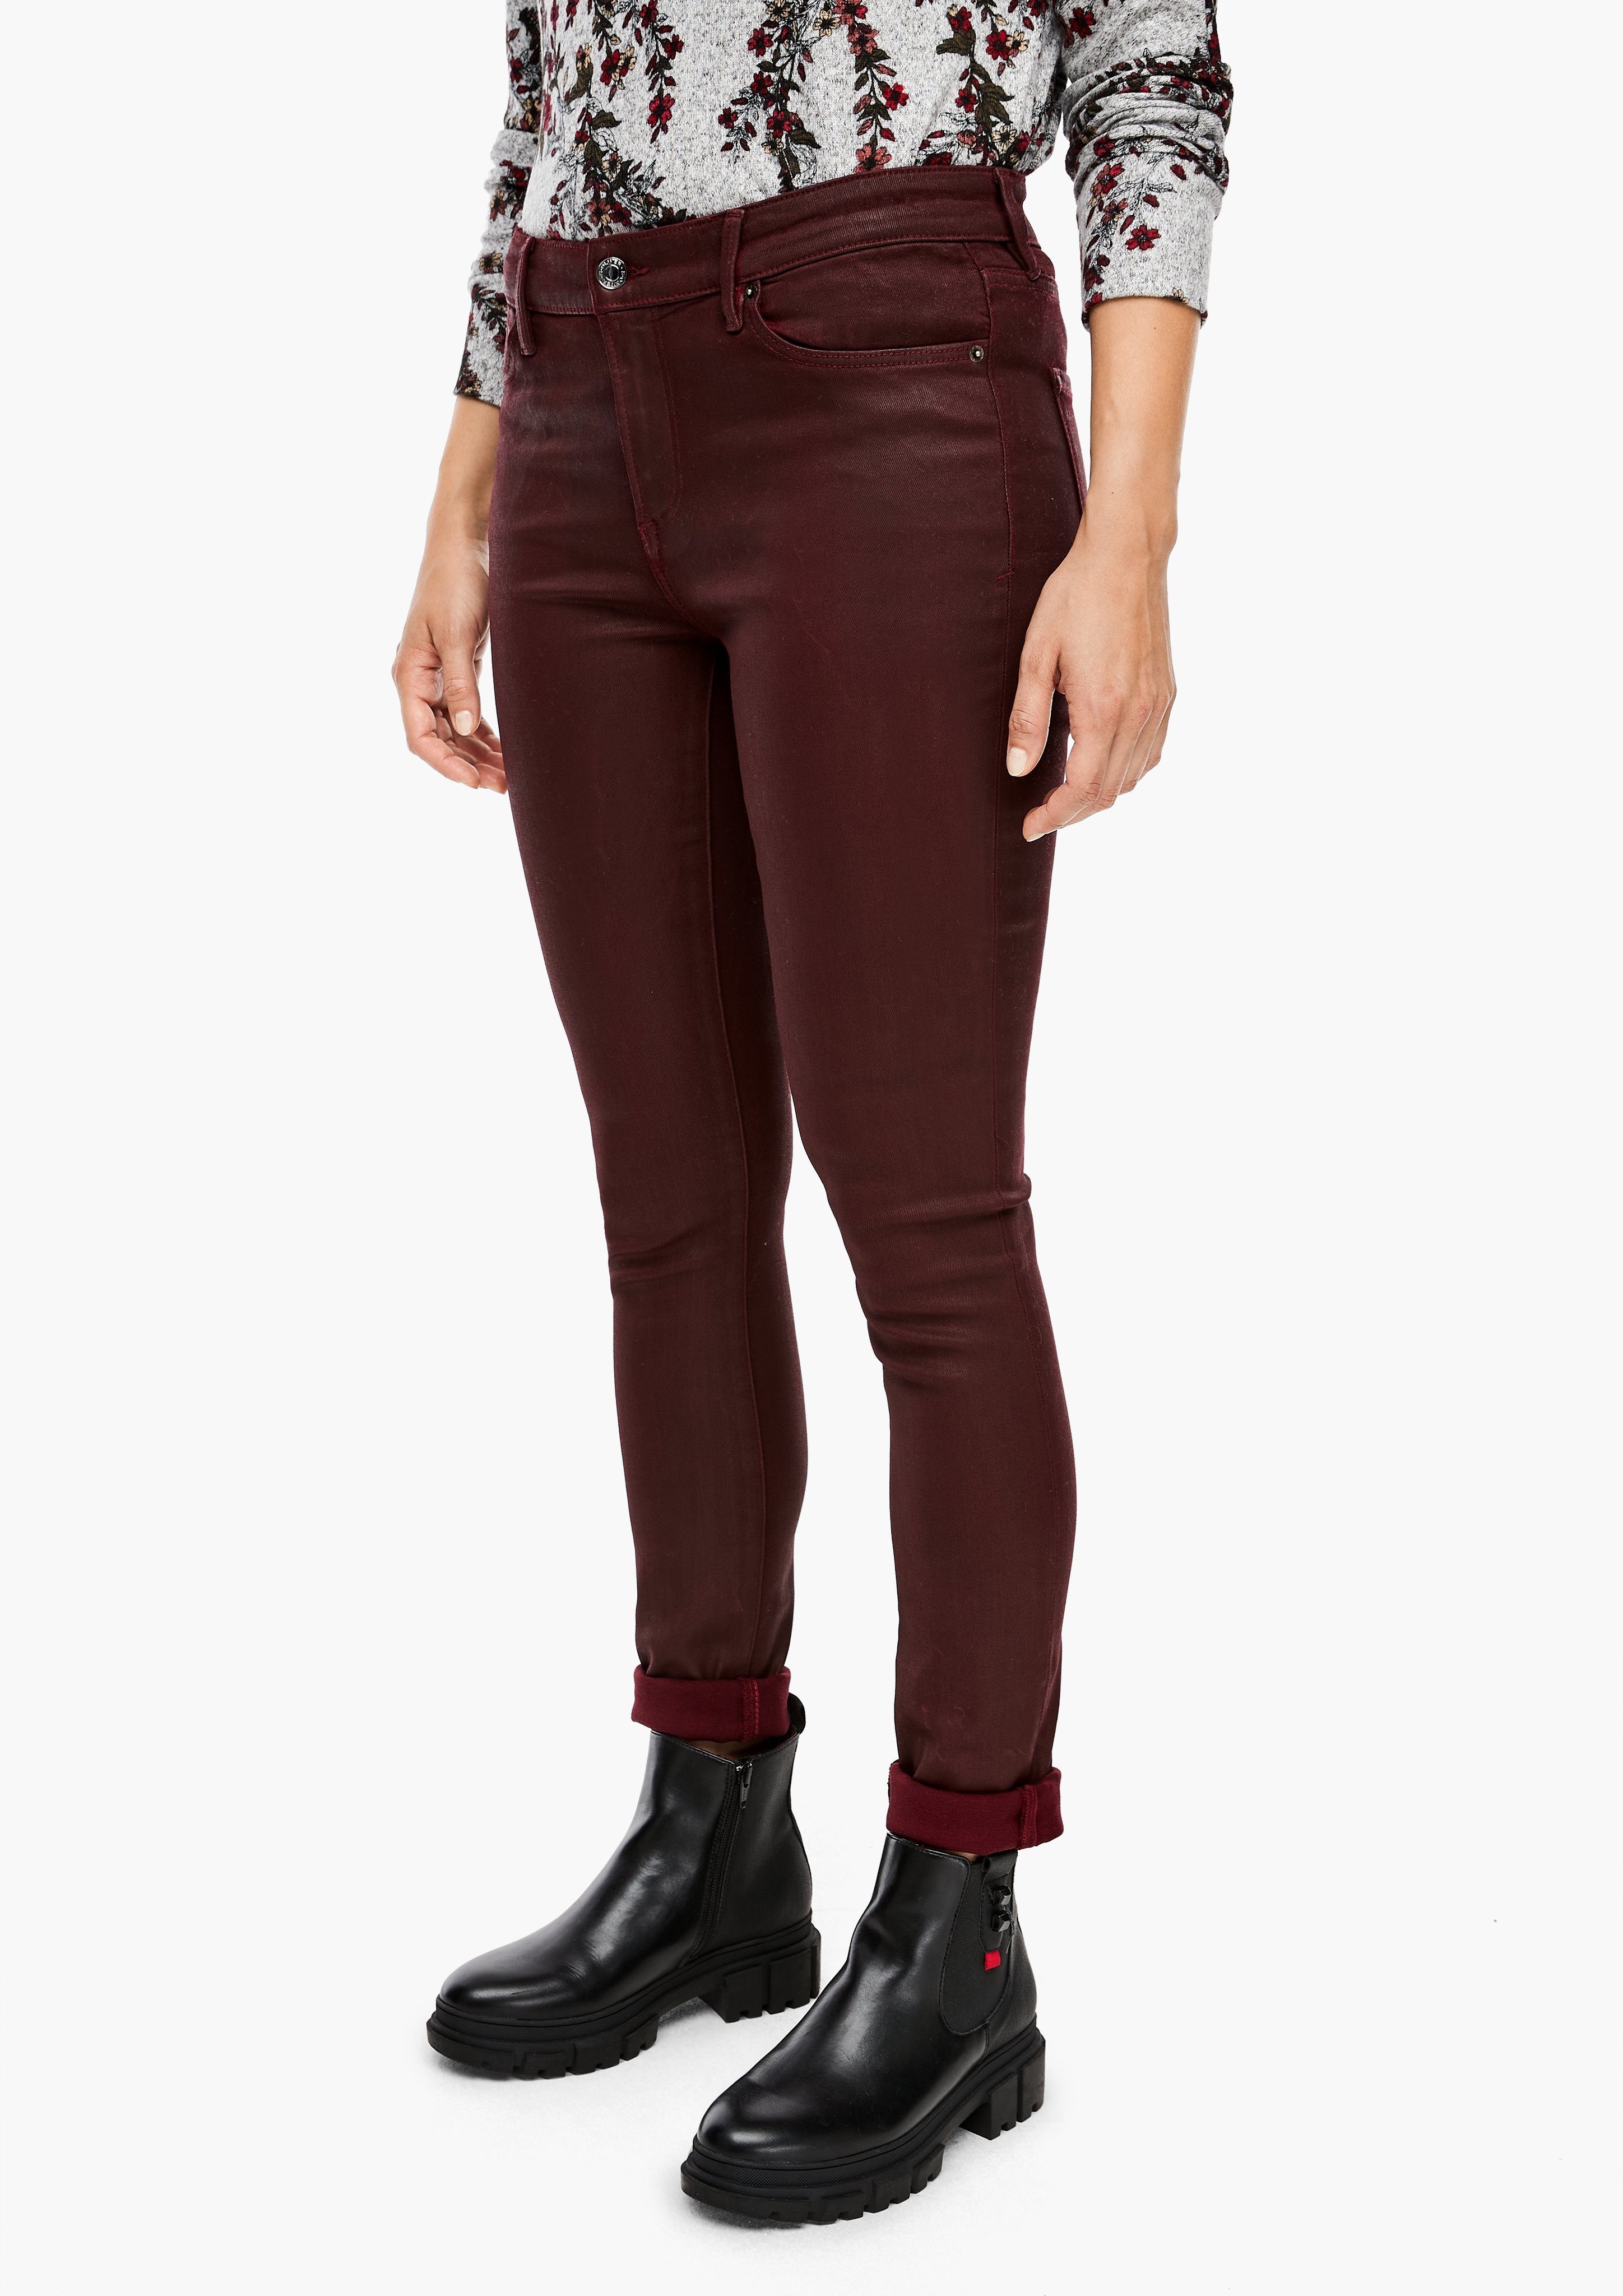 Oliver red label Skinny fit 5-Pocket-pantalones Velvet Cotton pantalones tamaño 38/32 42/32 S 